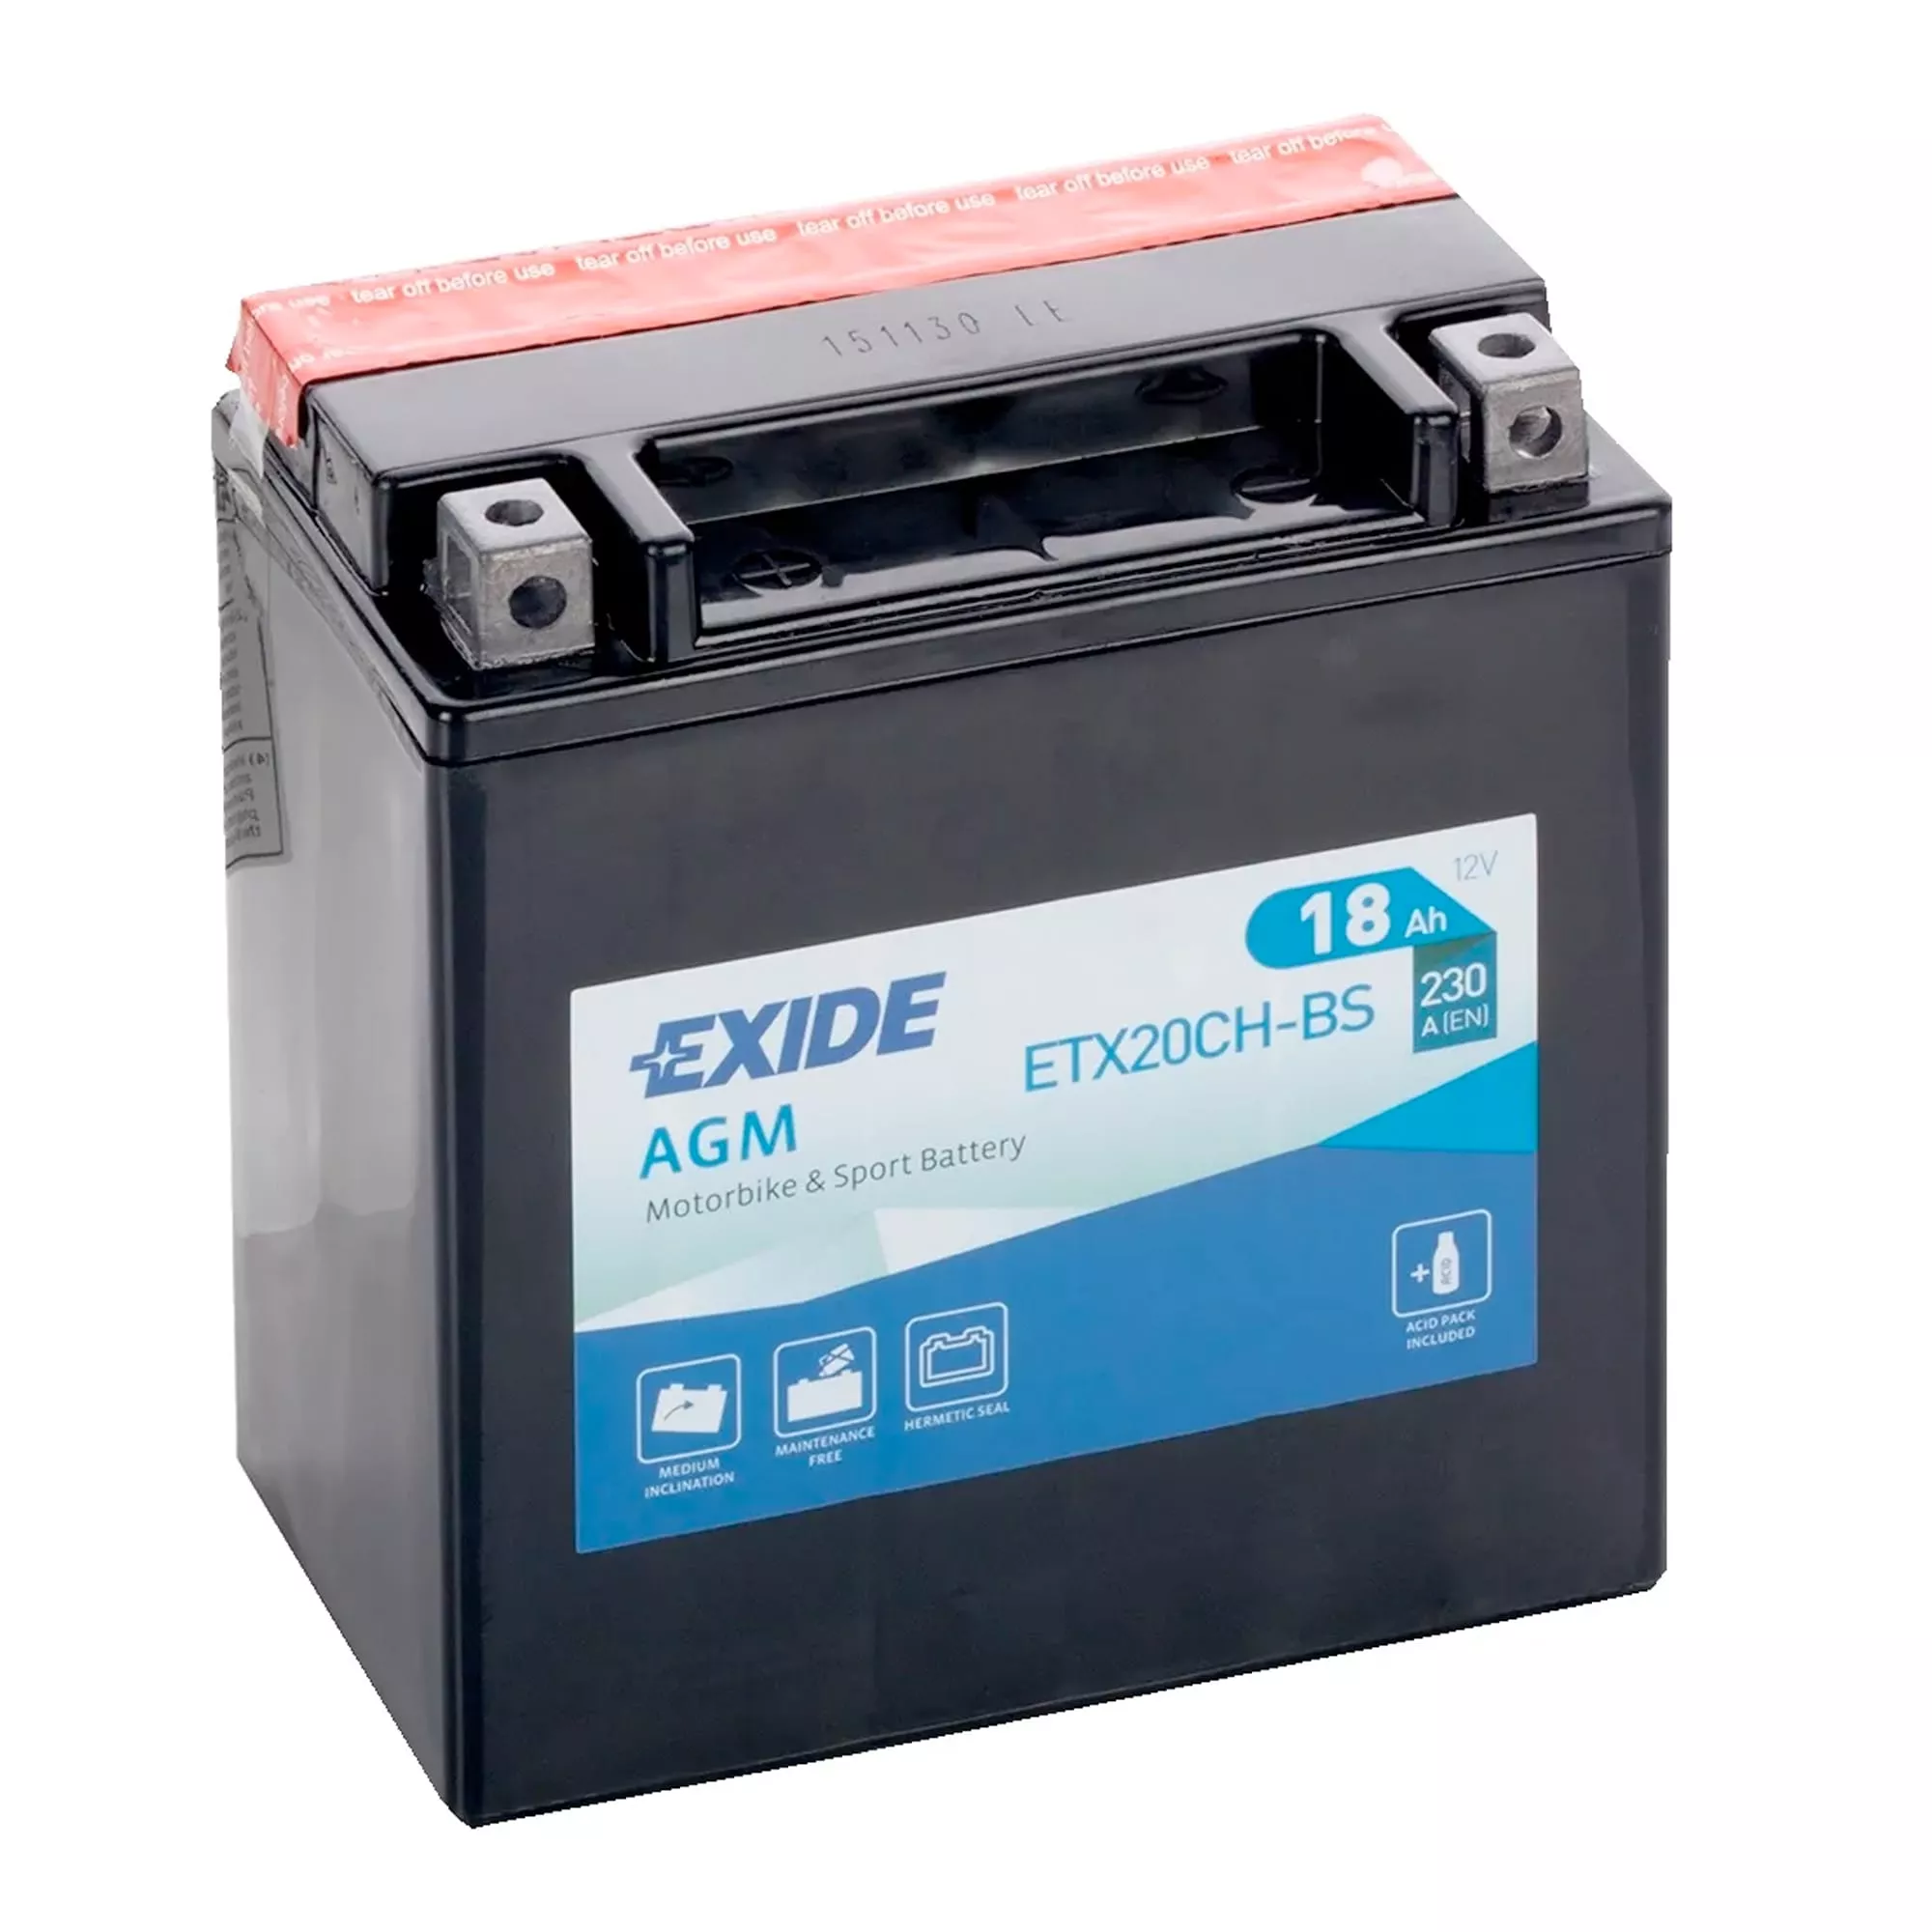 Мото аккумулятор EXIDE 6СТ-18Ah Аз AGM (ETX20CH-BS)